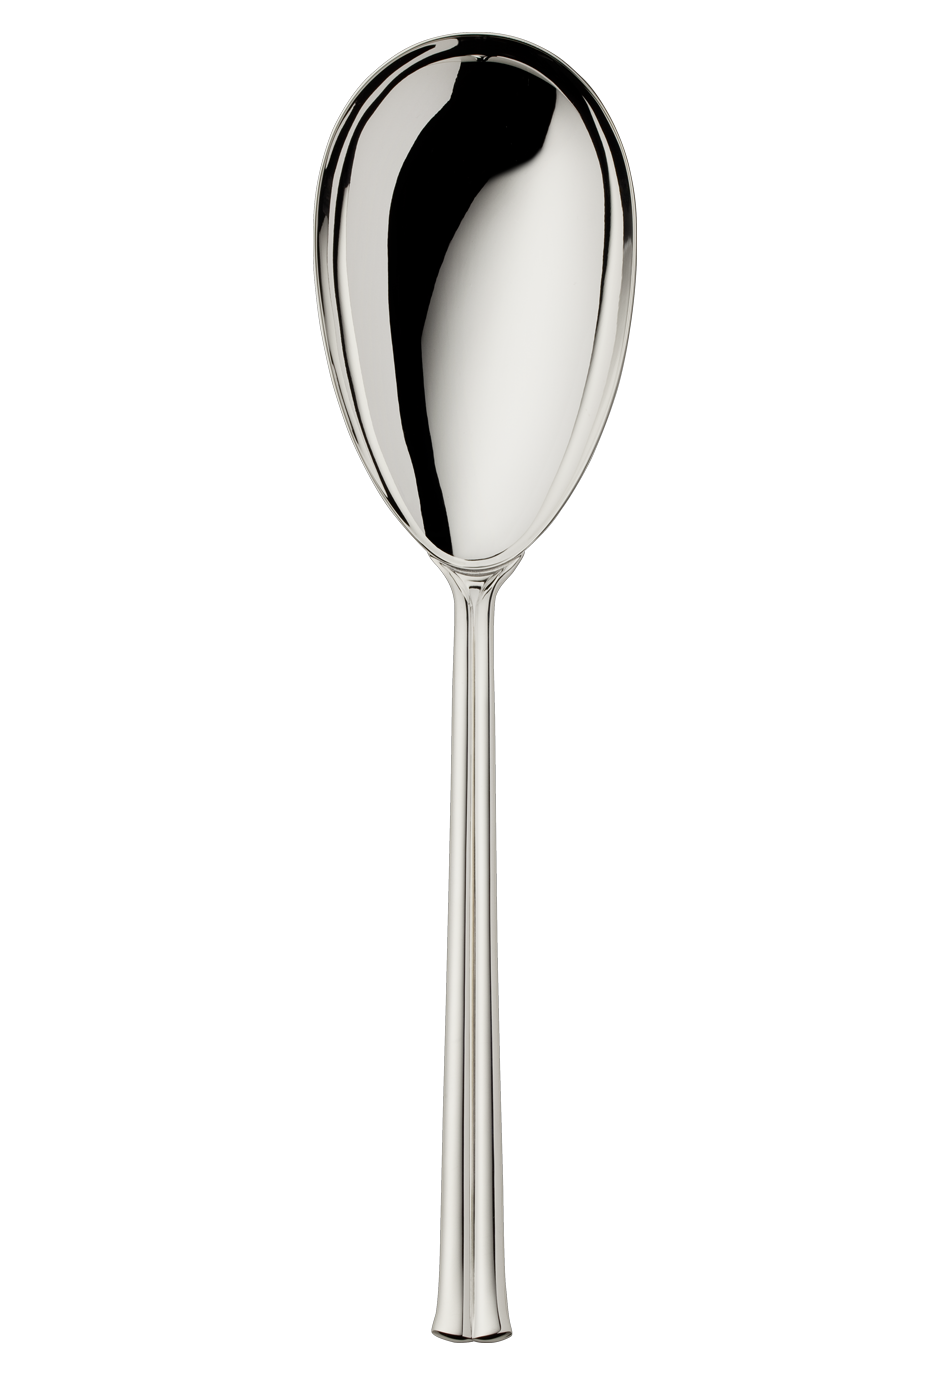 Viva Serving Spoon (150g massive silverplated)